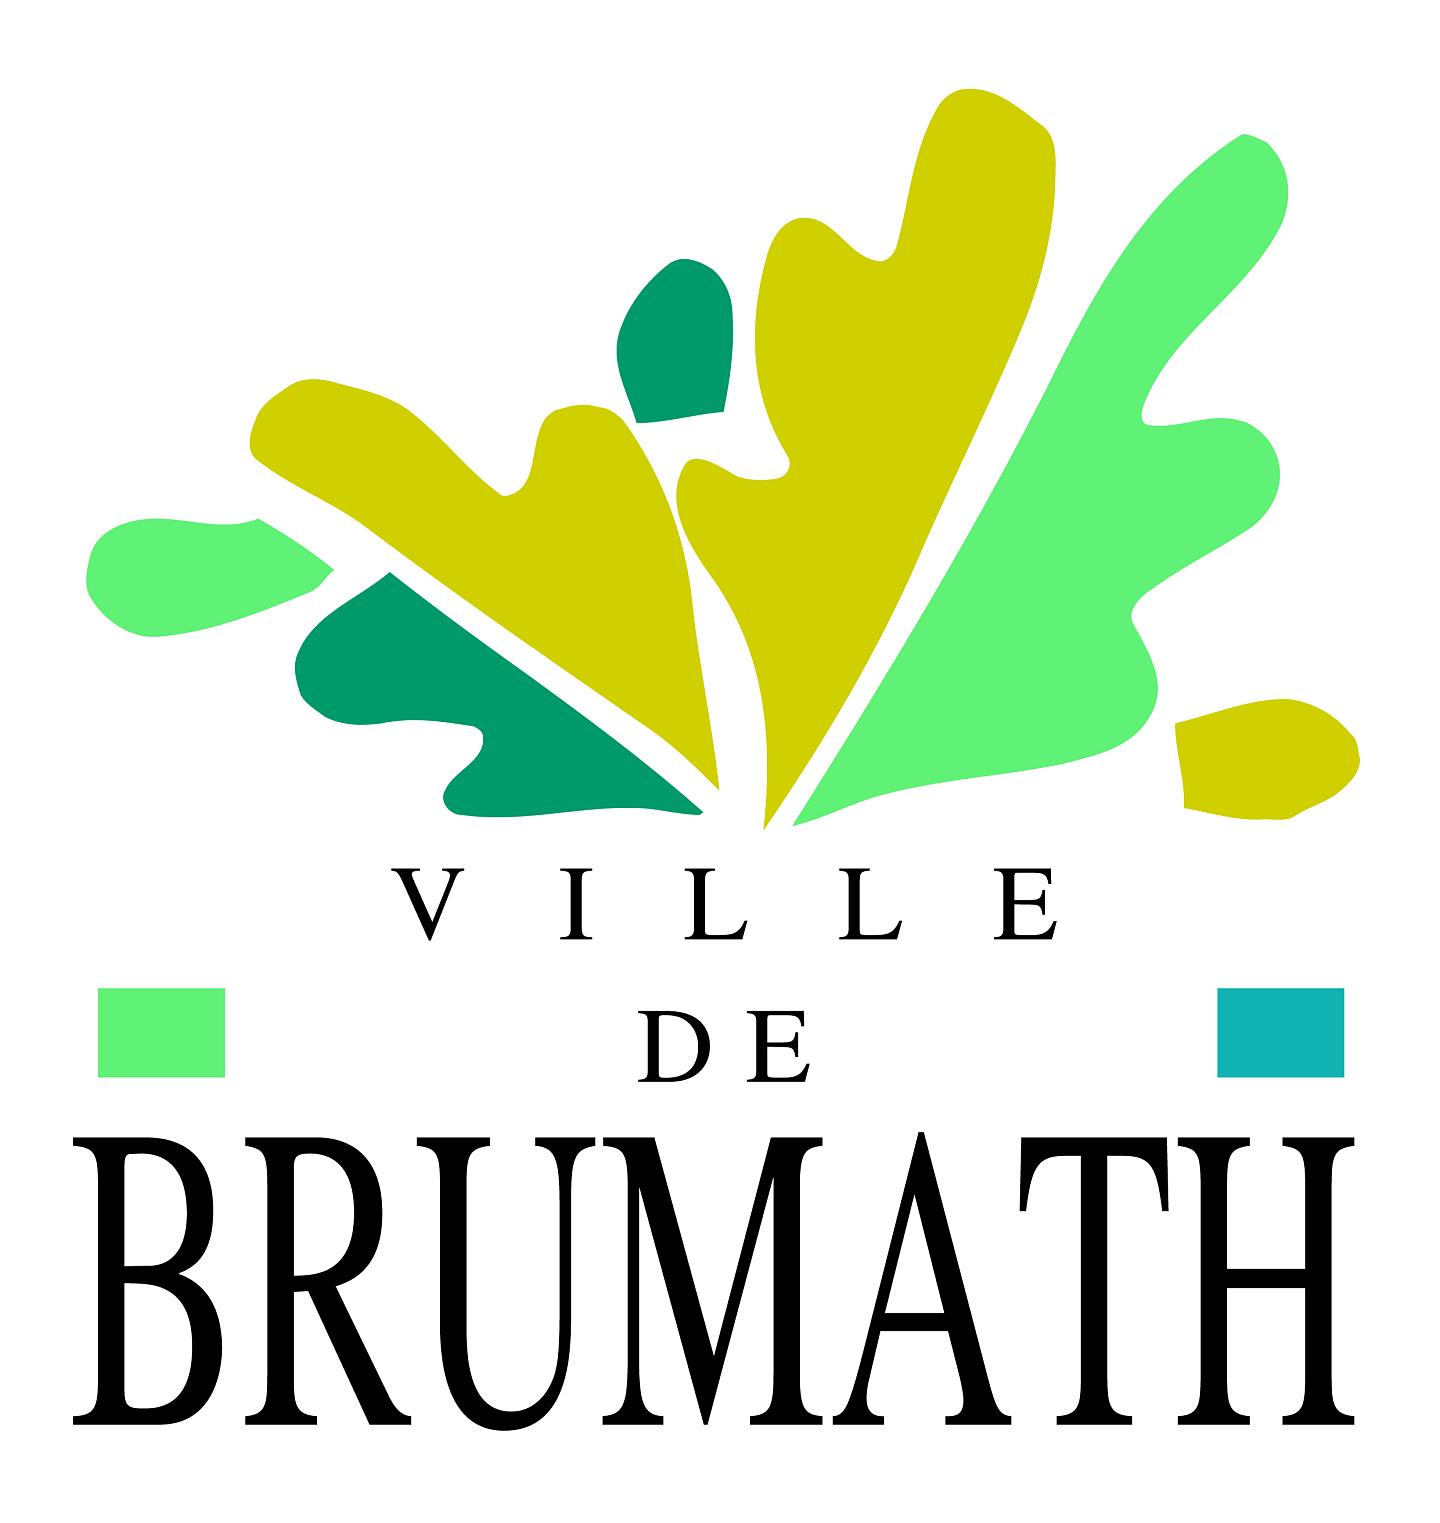 Ville de Brumath